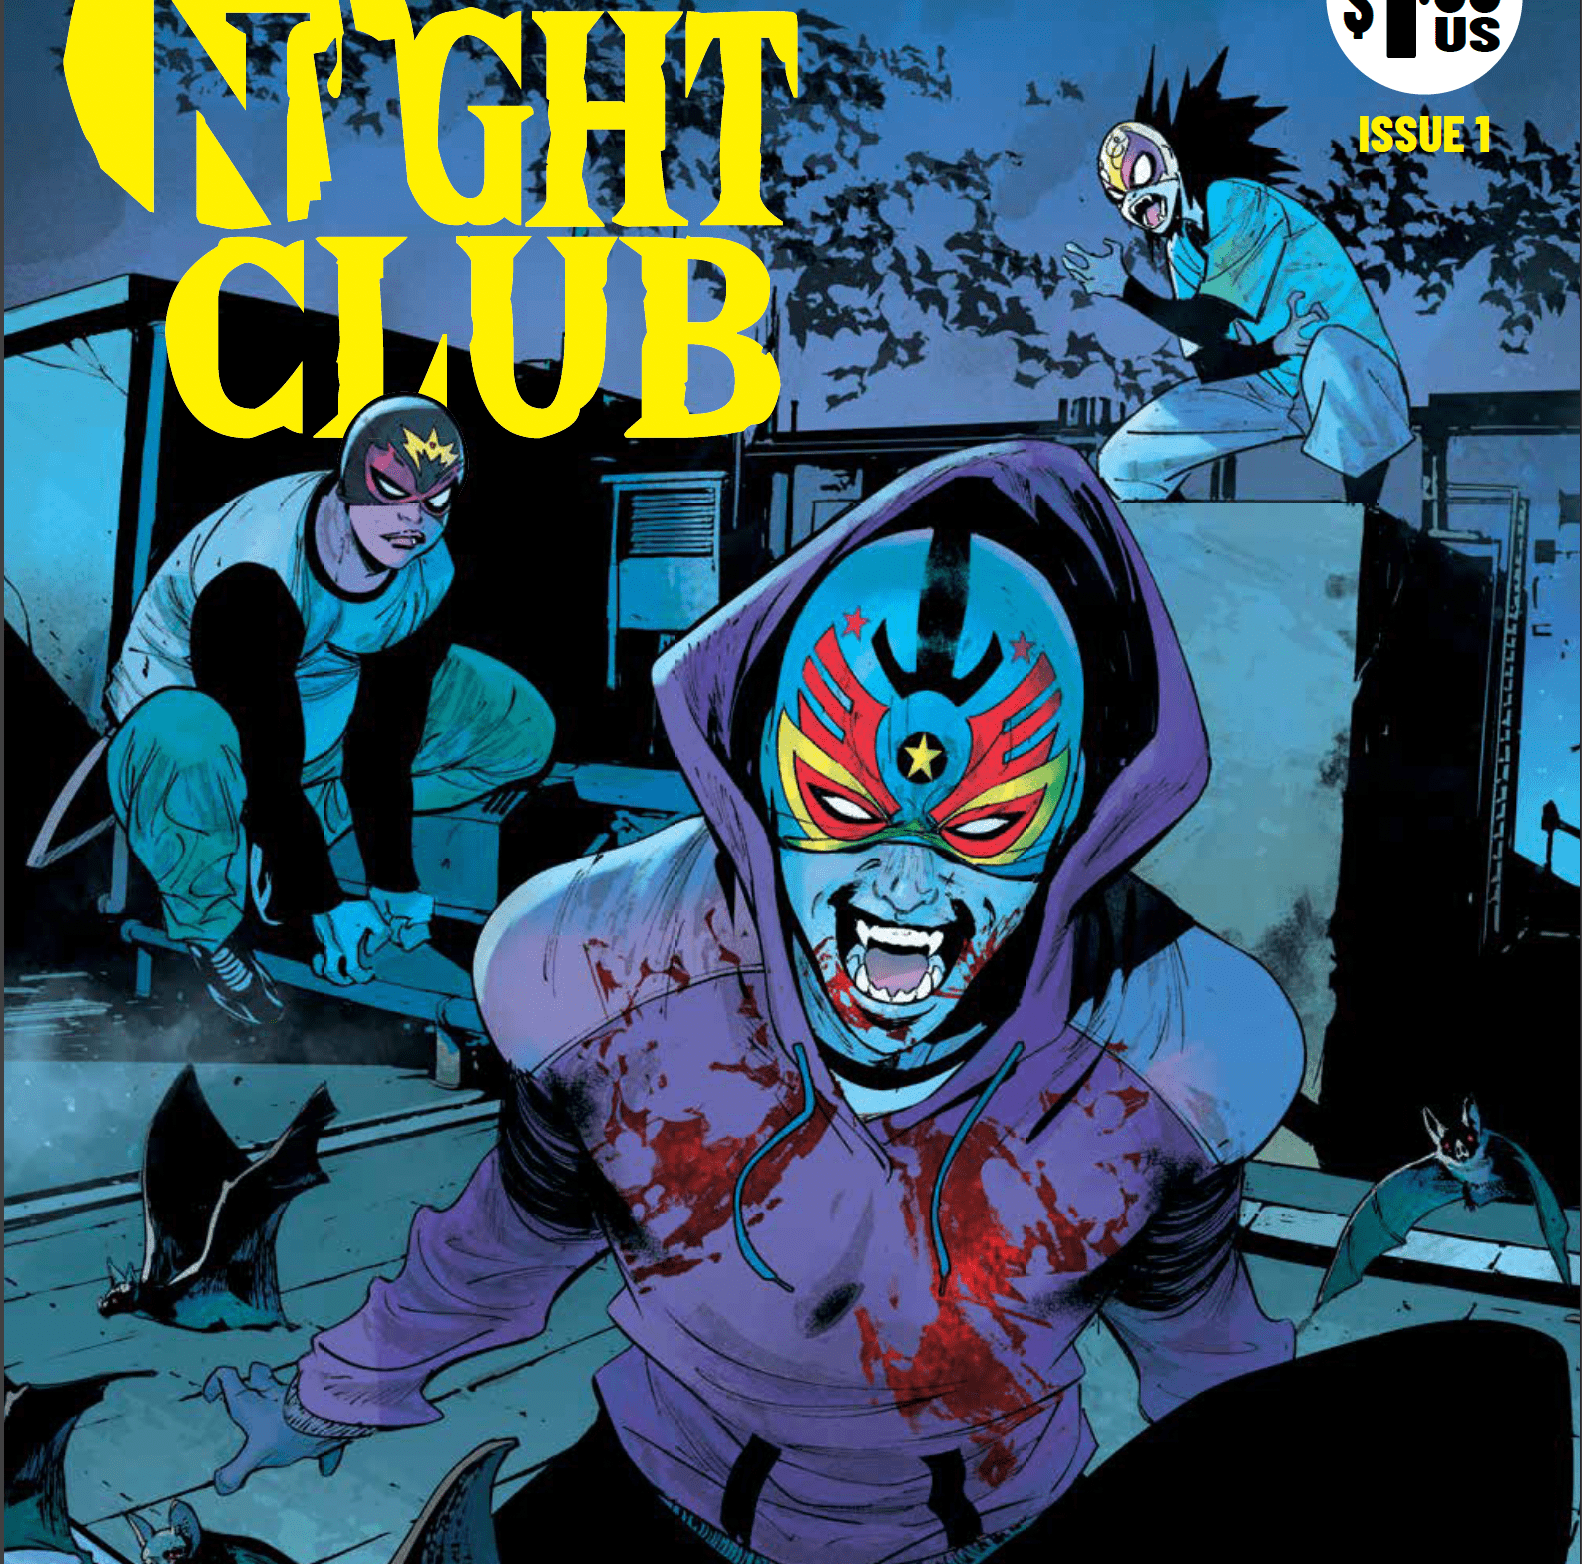 'Night Club' #1 introduces a superhero style vampire narrative